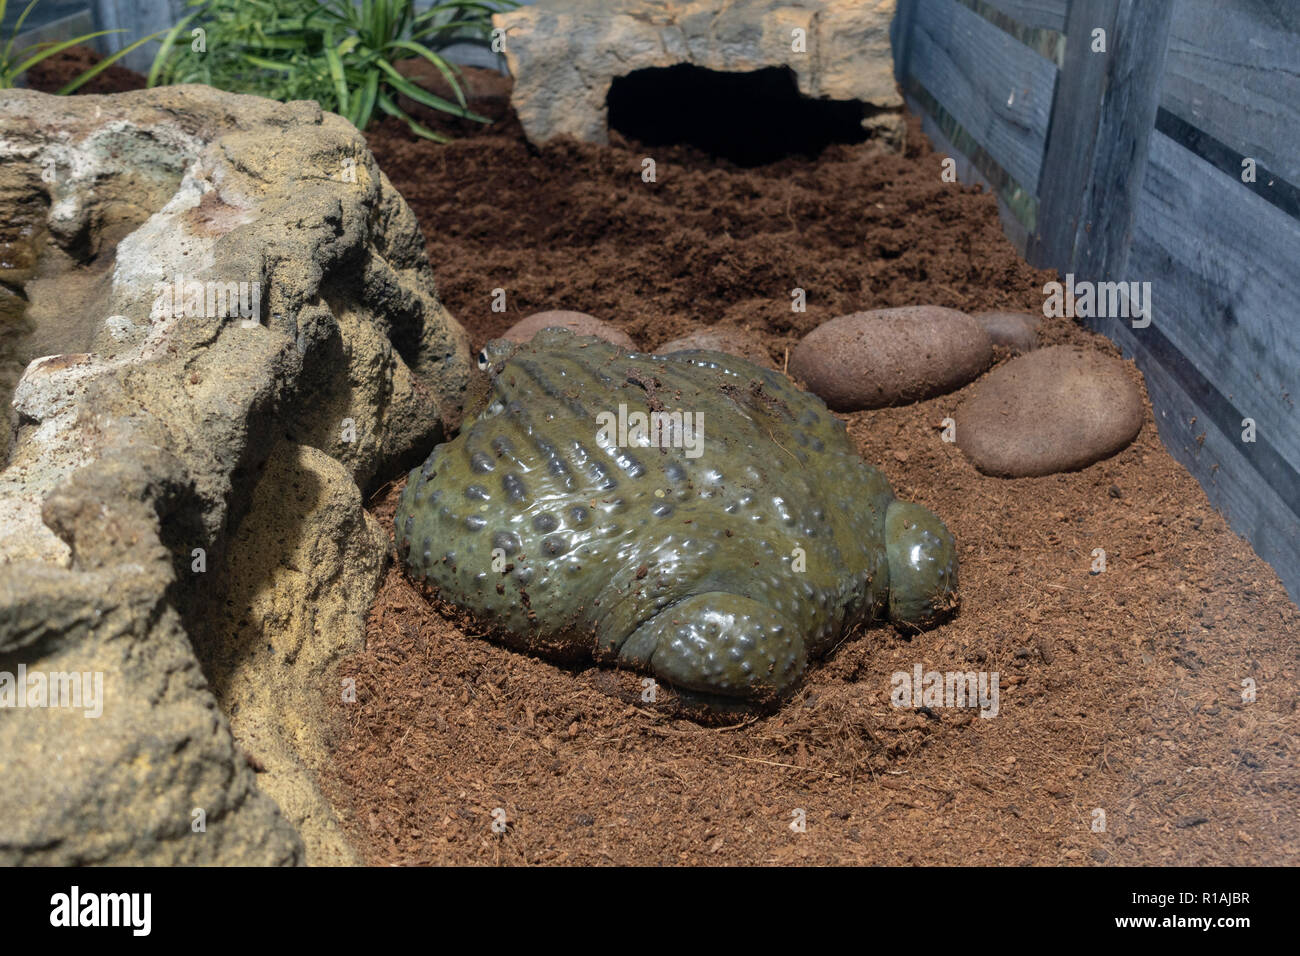 A  cane toad (Rhinella marina) in the San Diego Zoo Safari Park, Escondido, CA, United States Stock Photo